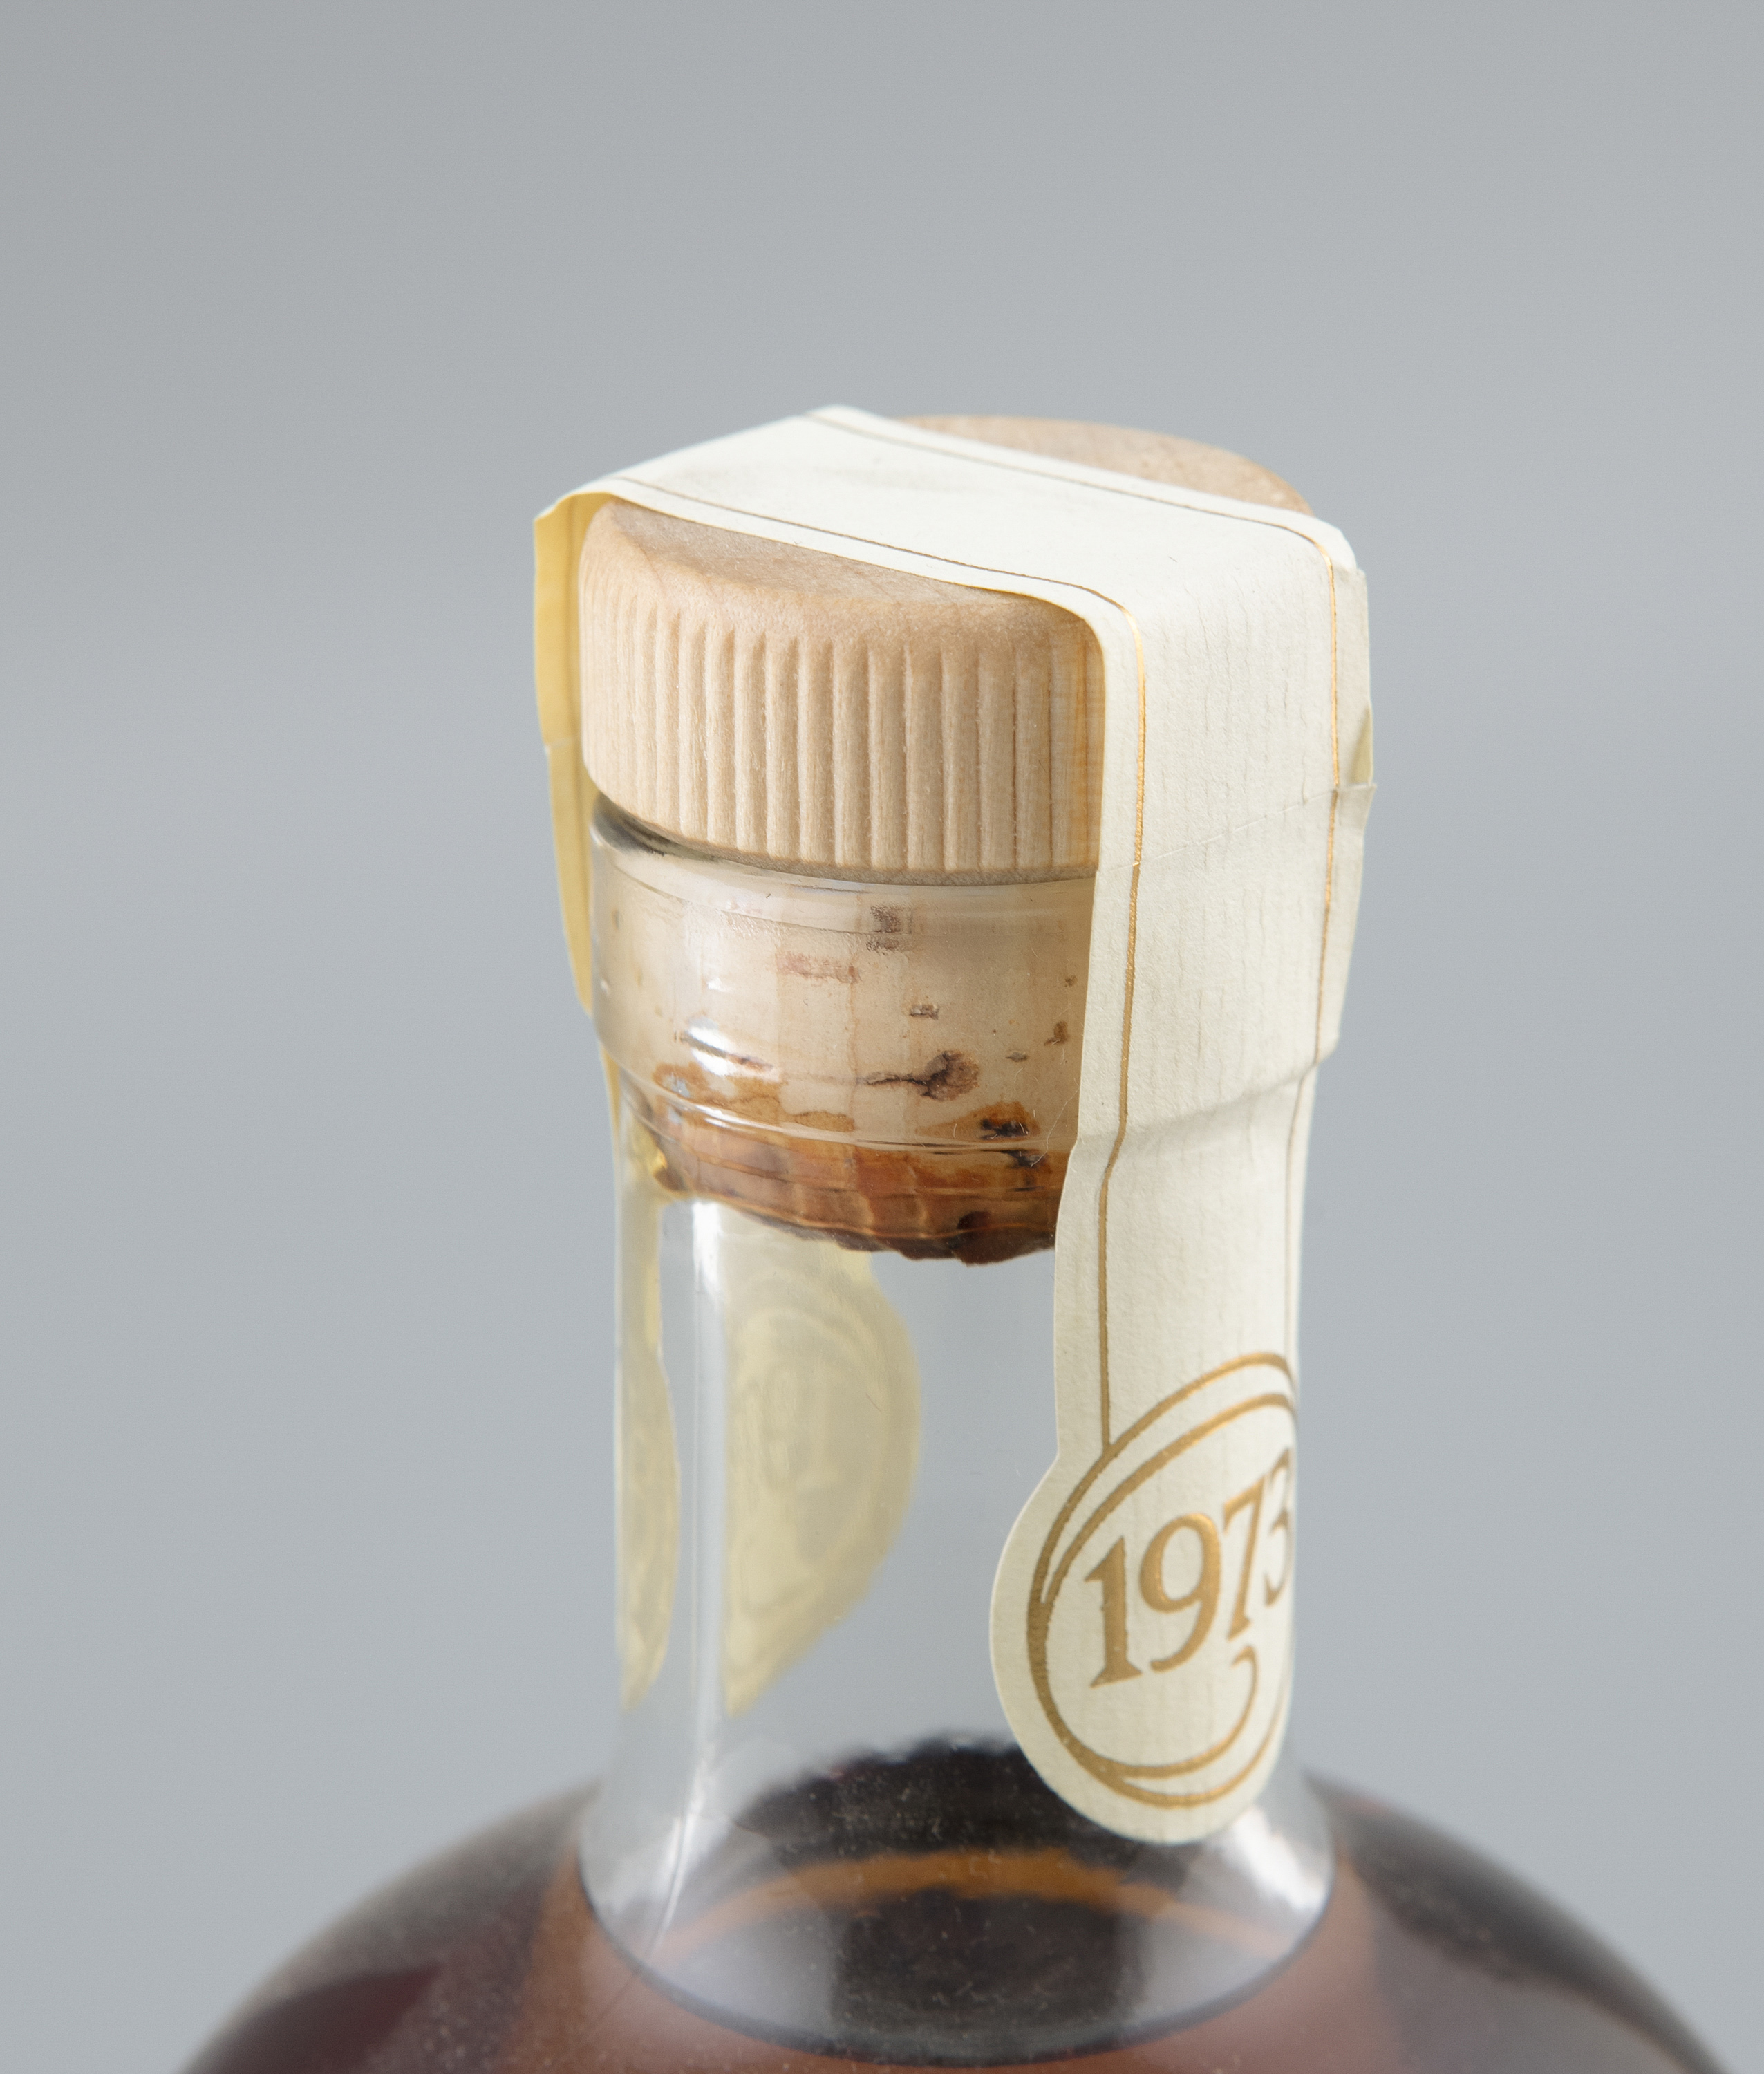 Midleton 25 Year Old Pure Pot Still Irish Whiskey 1 bottle in presentation case, bottle number 039 - Image 3 of 11